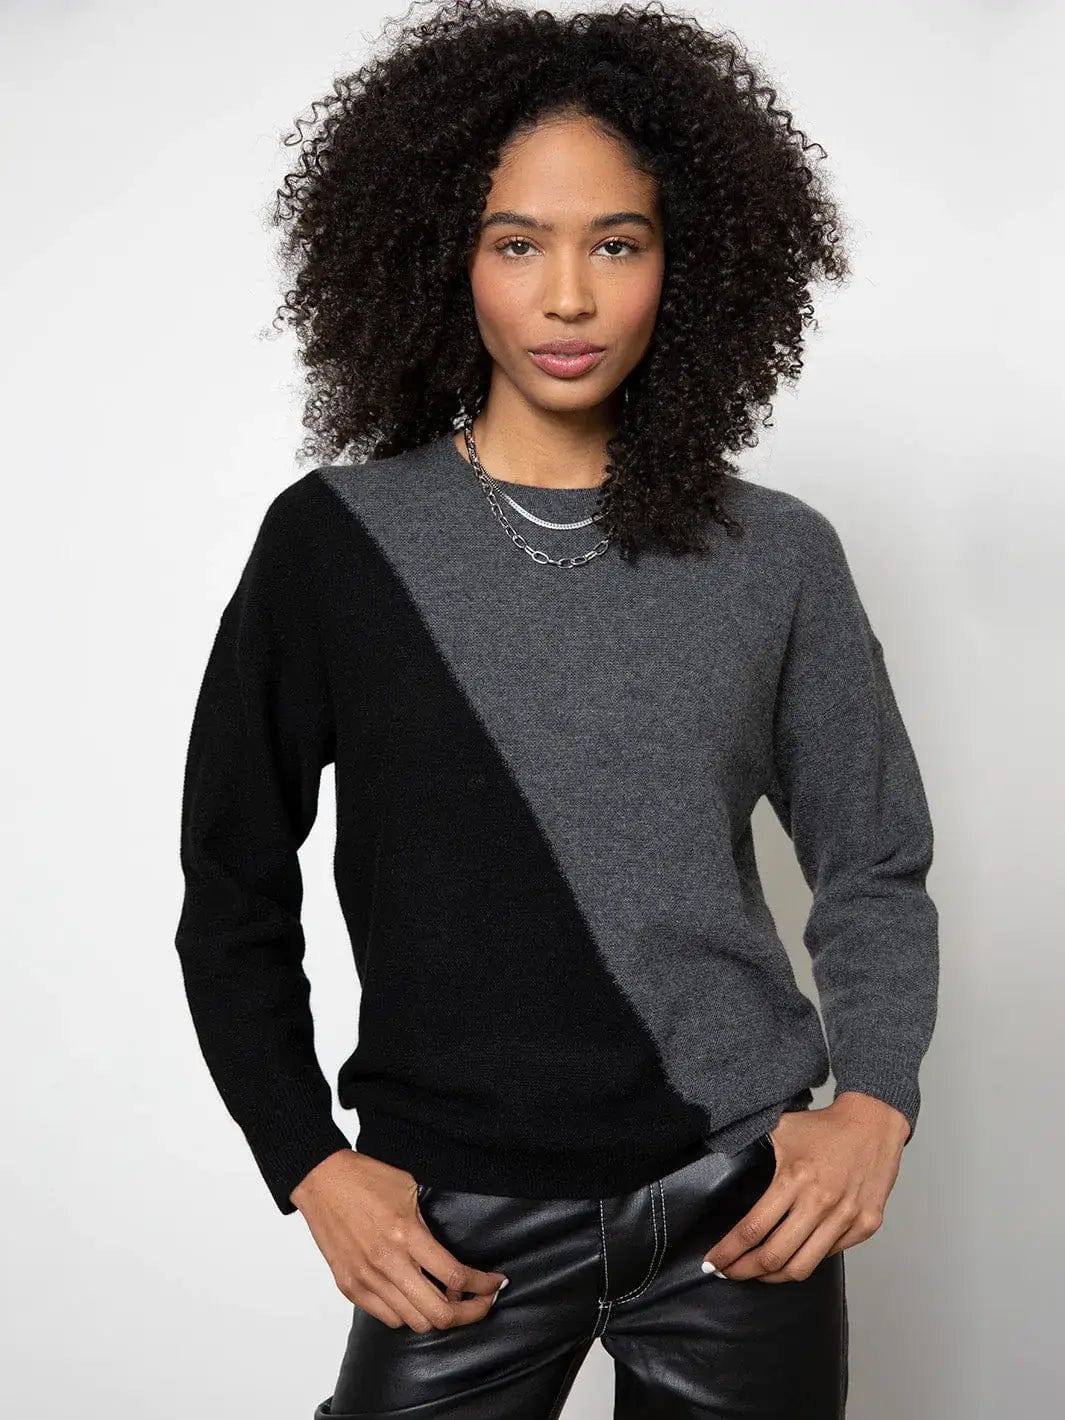 27 Miles Malibu Sweaters 27 Miles Jazz Sweater in Black /Gray color Asym block